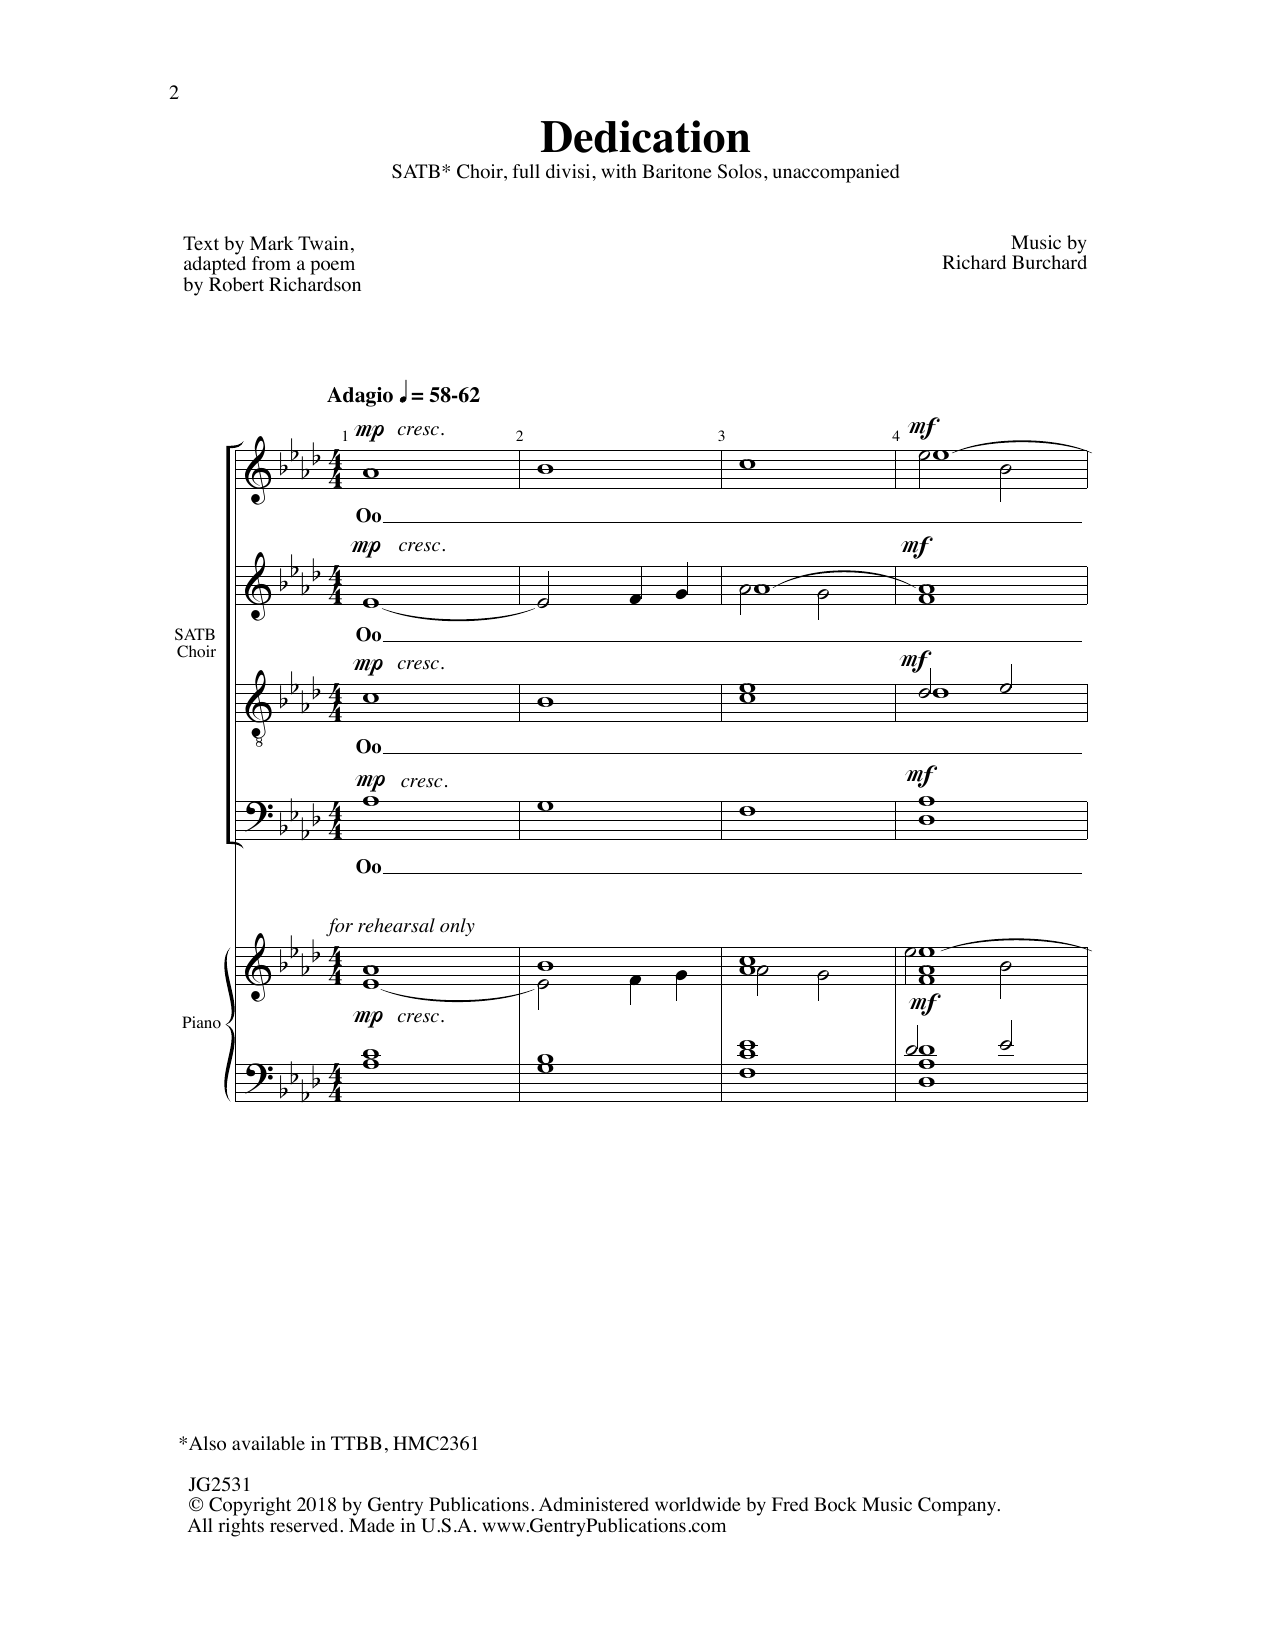 Richard Burchard Dedication Sheet Music Notes & Chords for Choral - Download or Print PDF